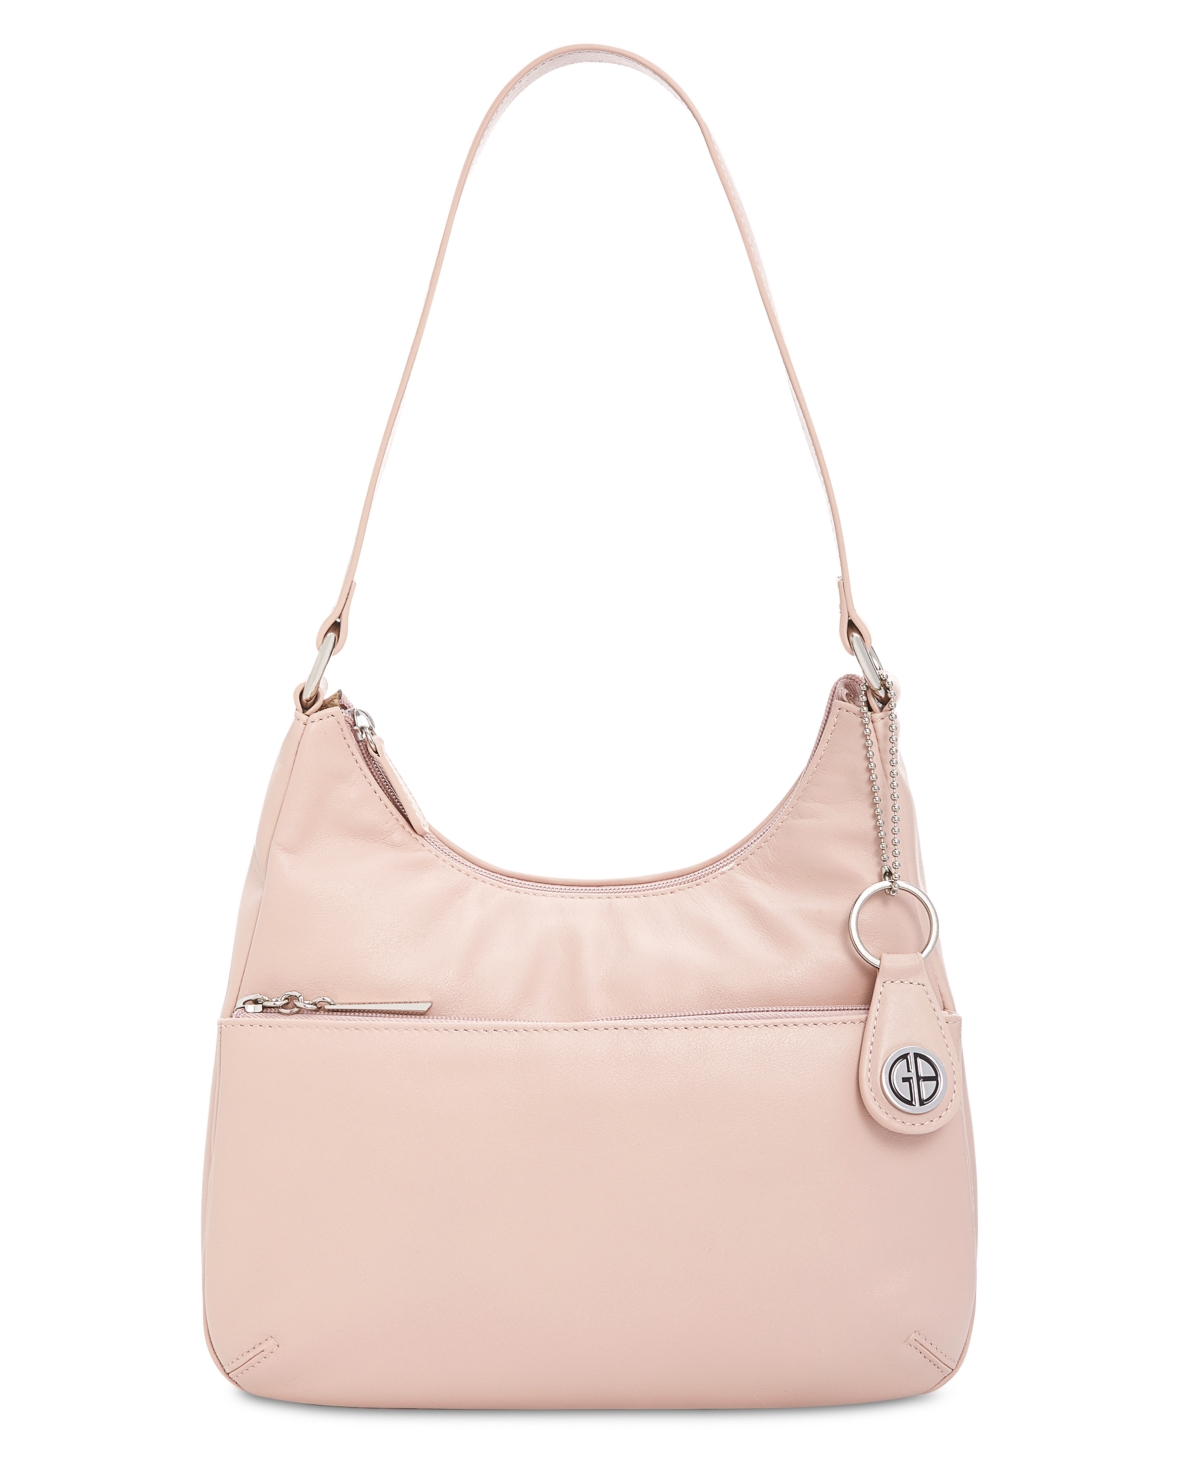 Giani Bernini Nappa Leather Hobo Bag, Created For Macy's In Rose,silver